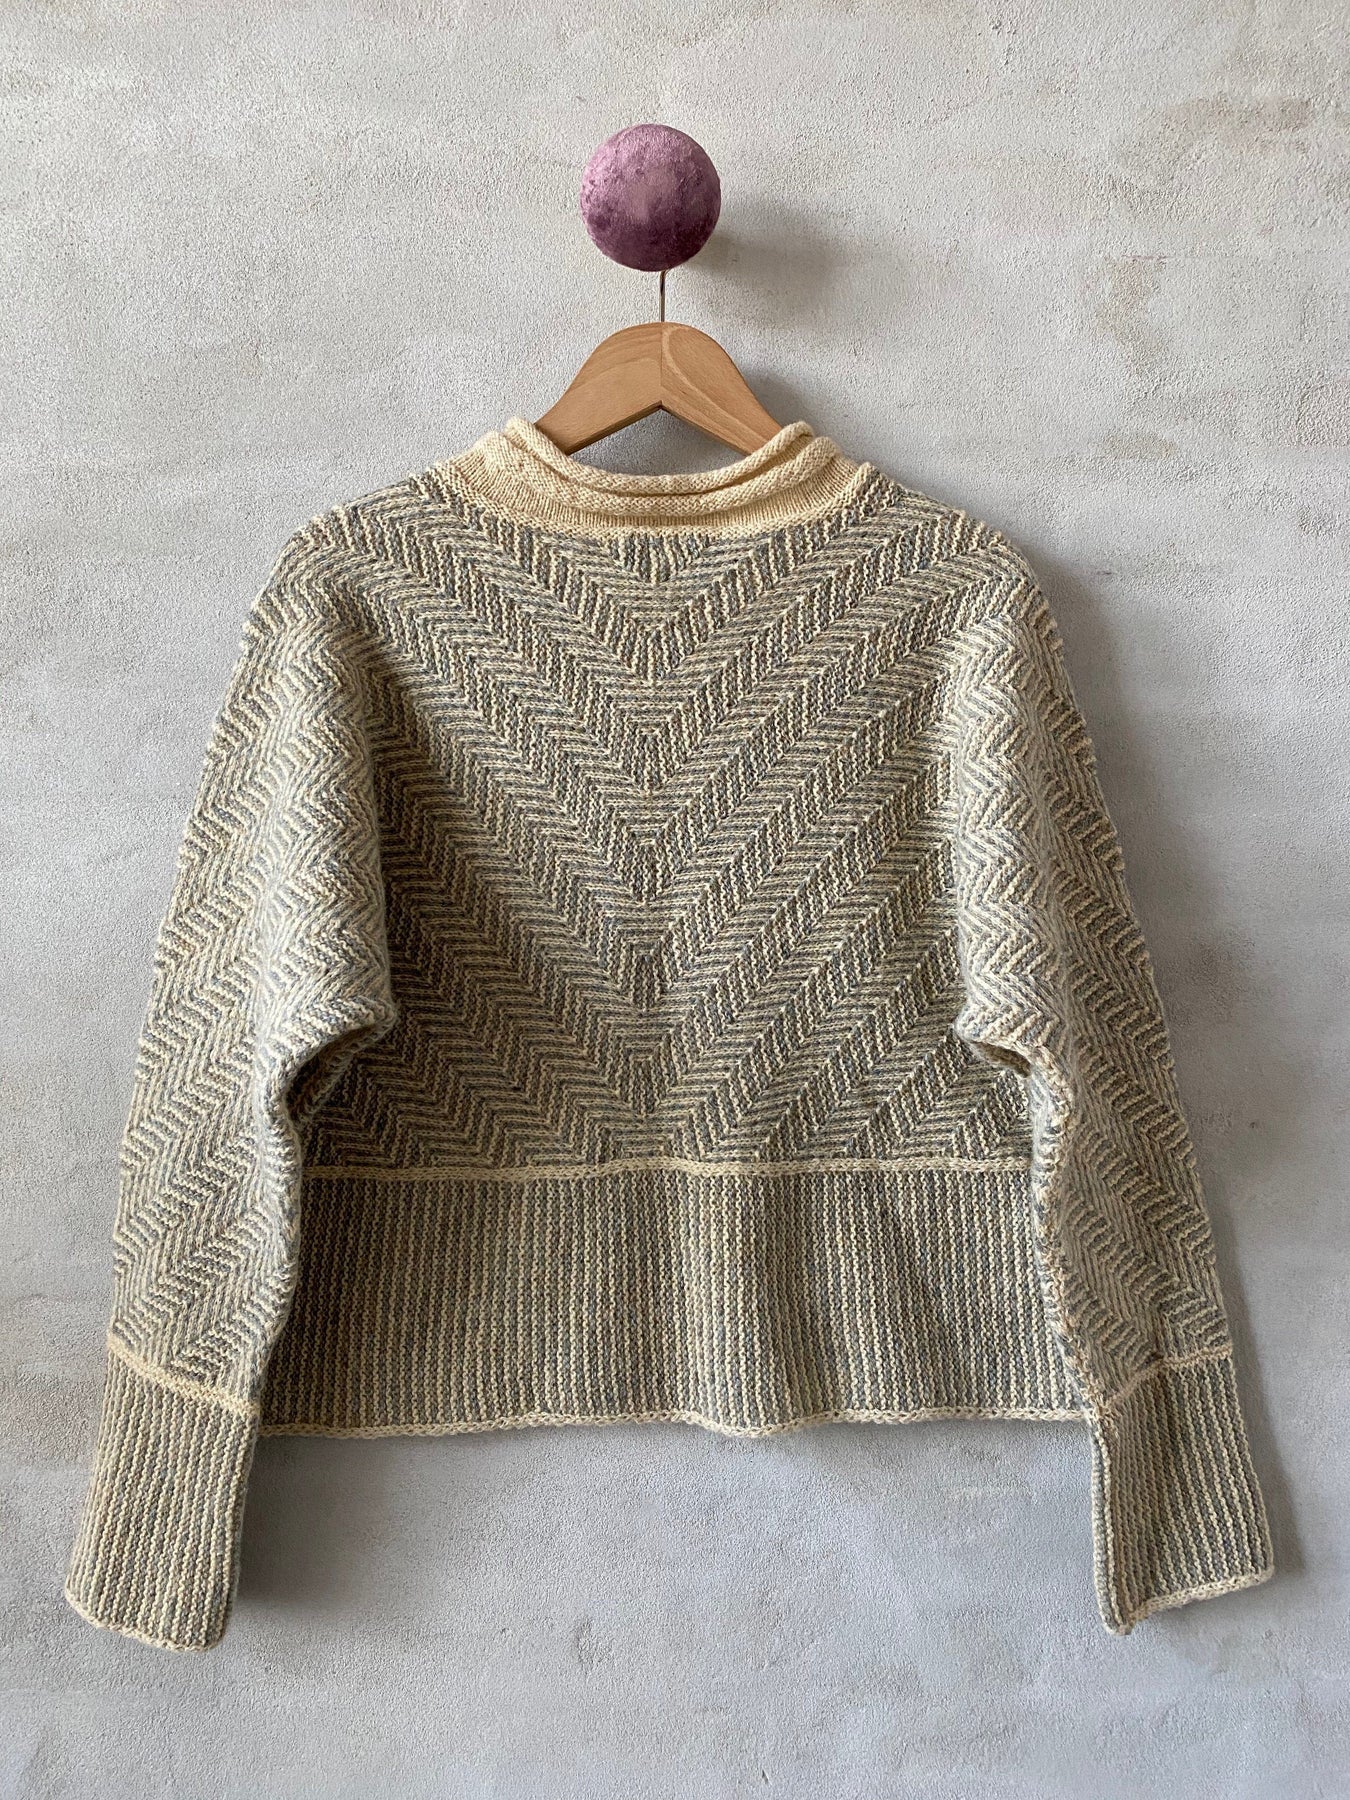 Jazz cardigan/sweater by Hanne Falkenberg, No 20 knitting kit